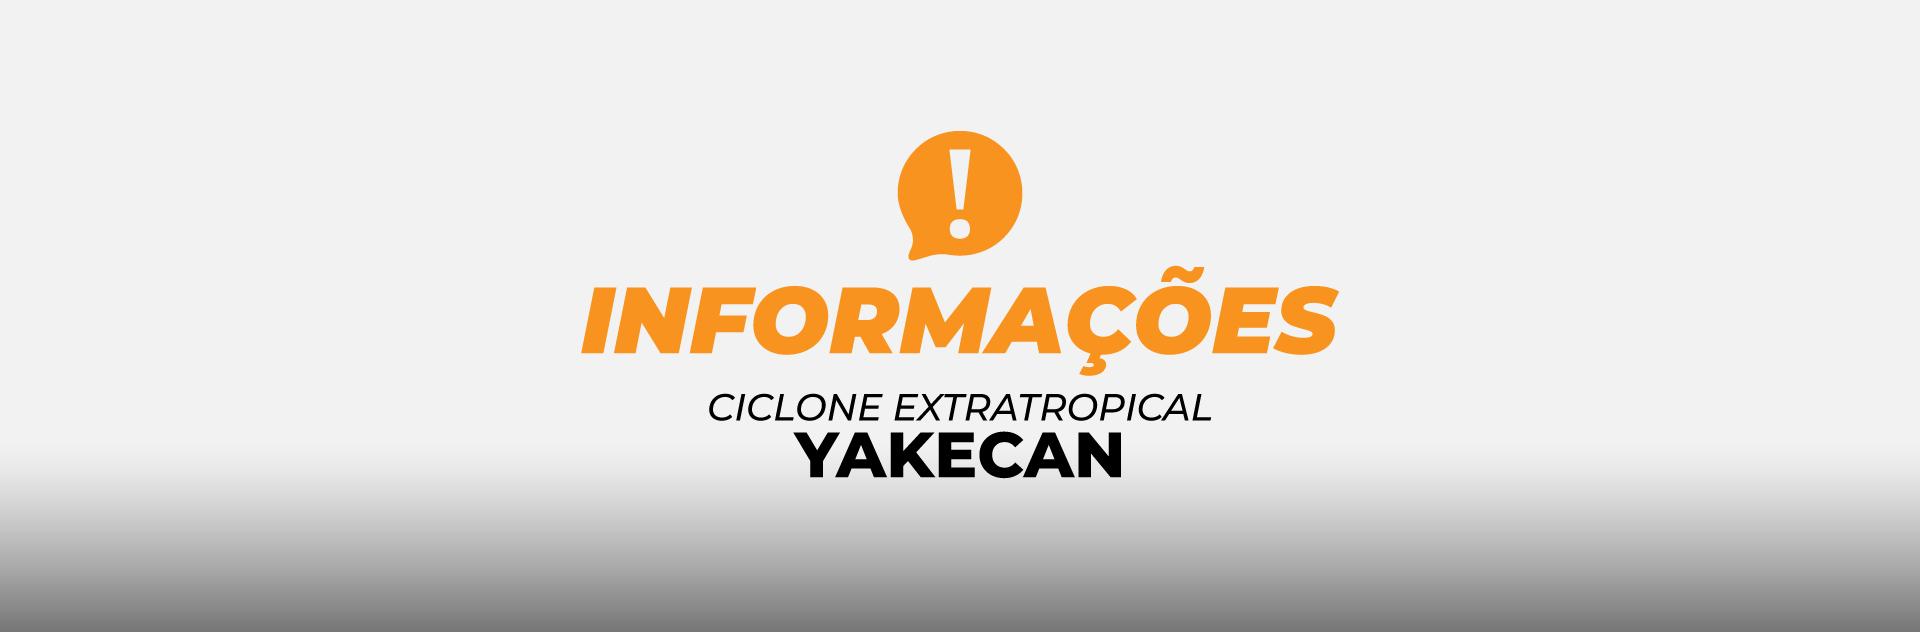 Informações Ciclone Extratropical Yakecan